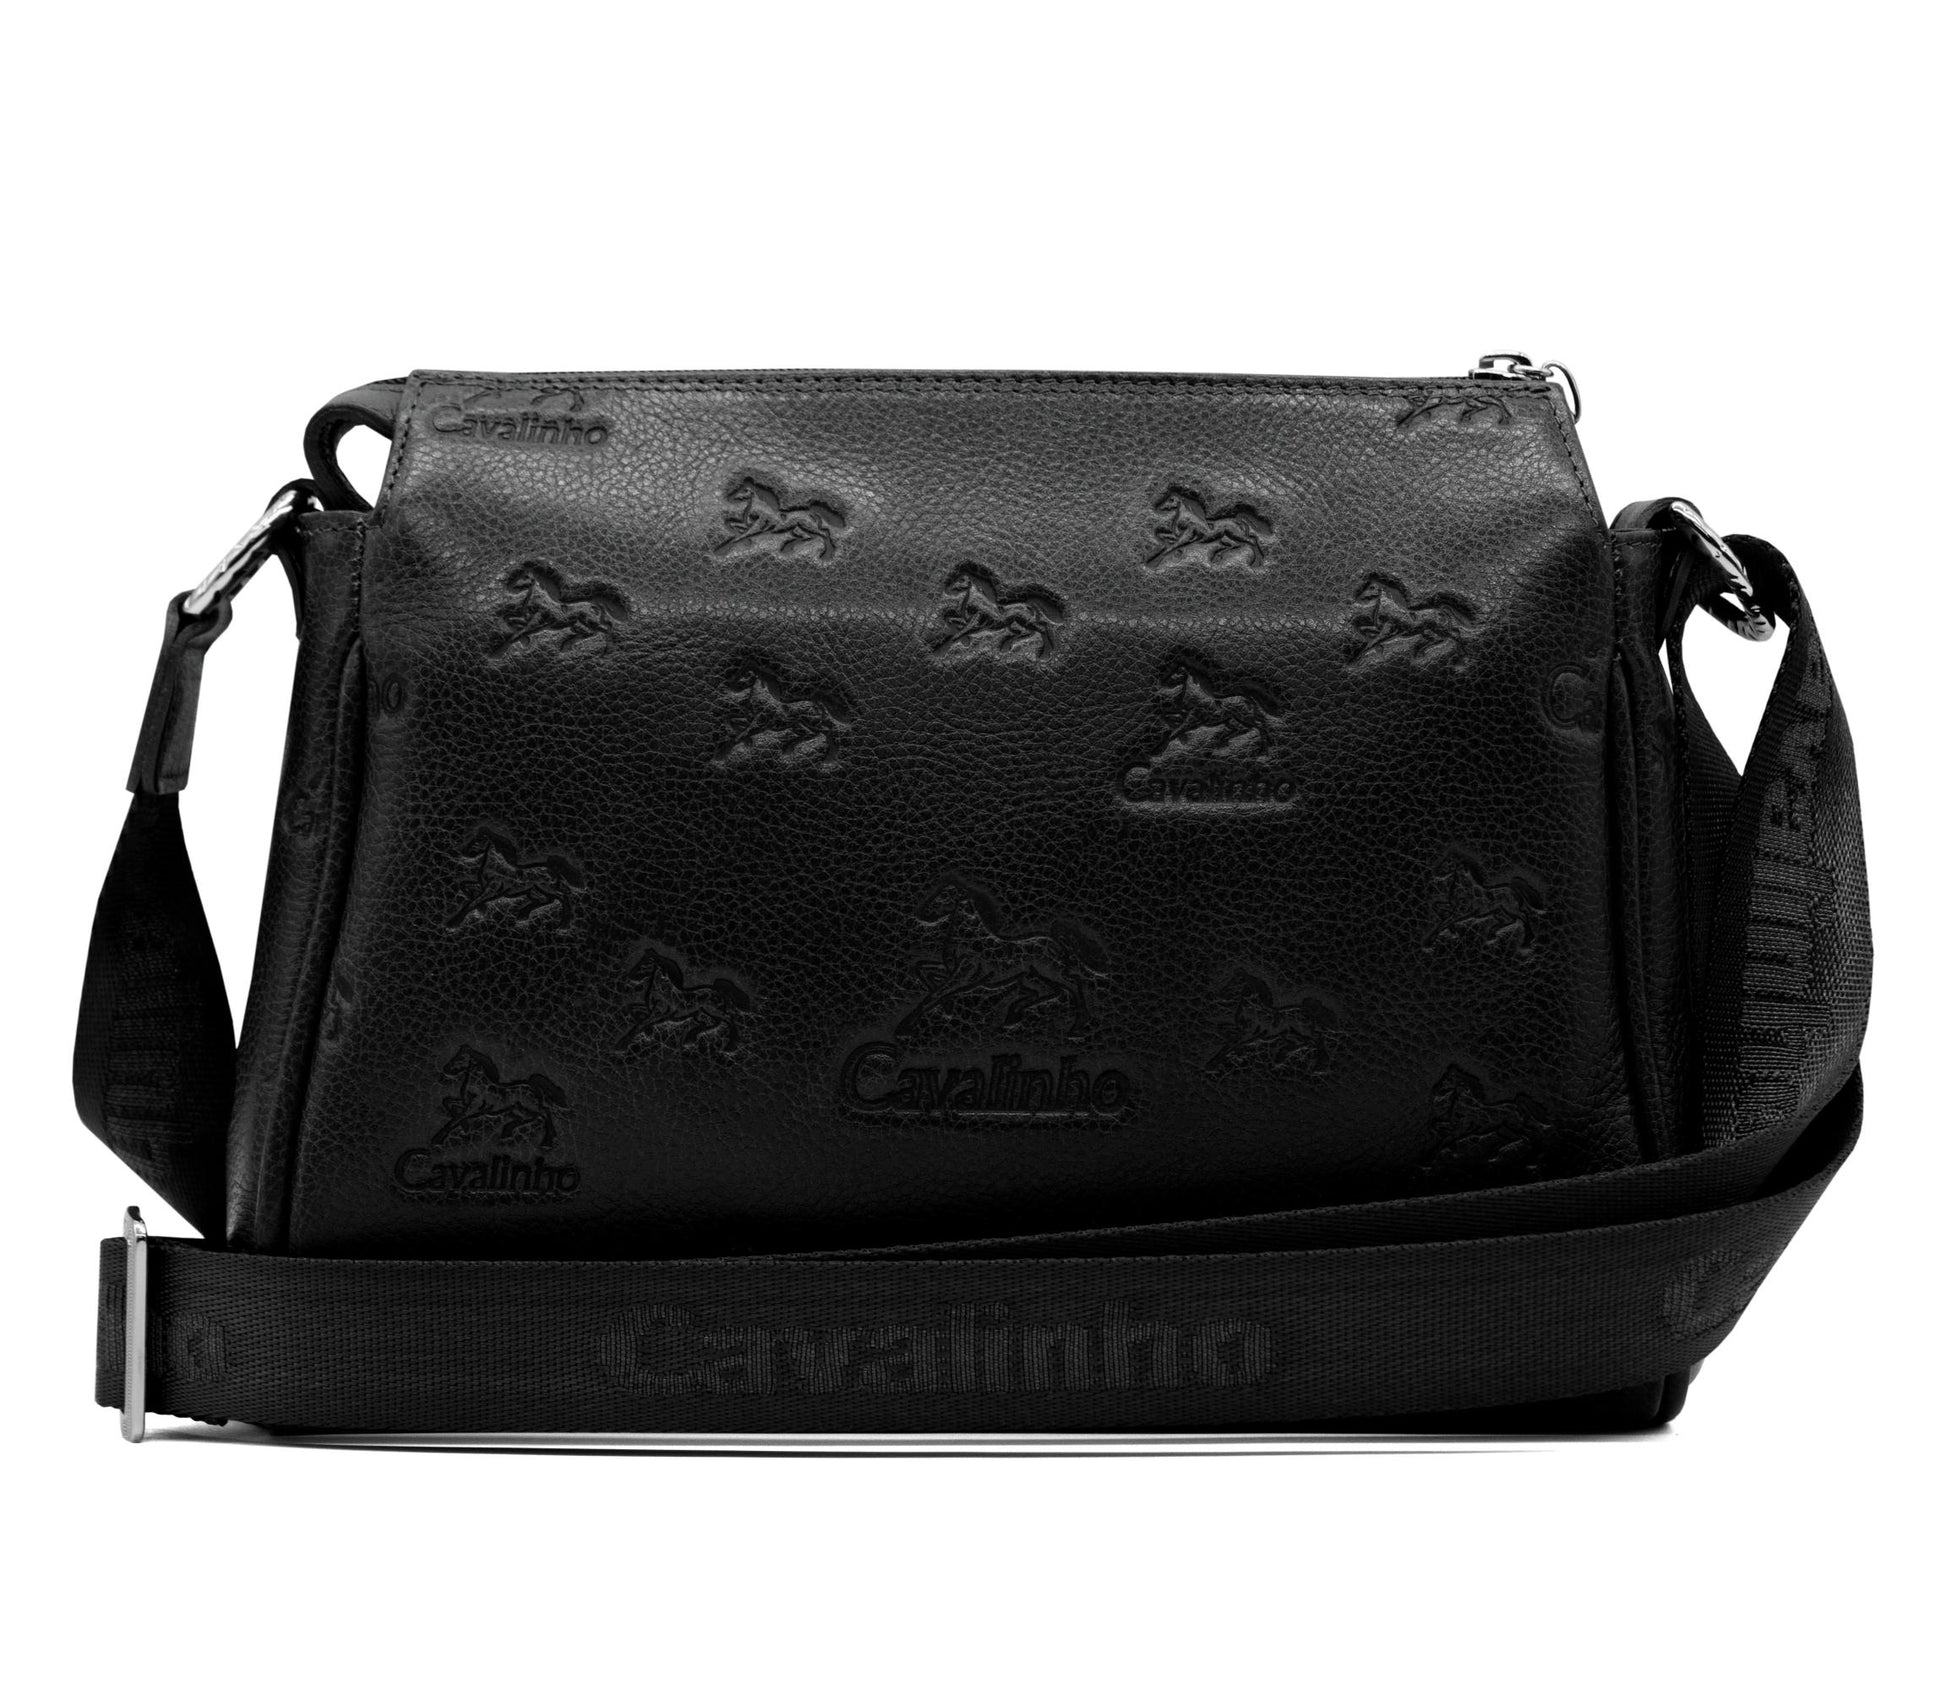 Cavalinho Cavalo Lusitano Leather Crossbody Bag - Black - 18090373.01_3